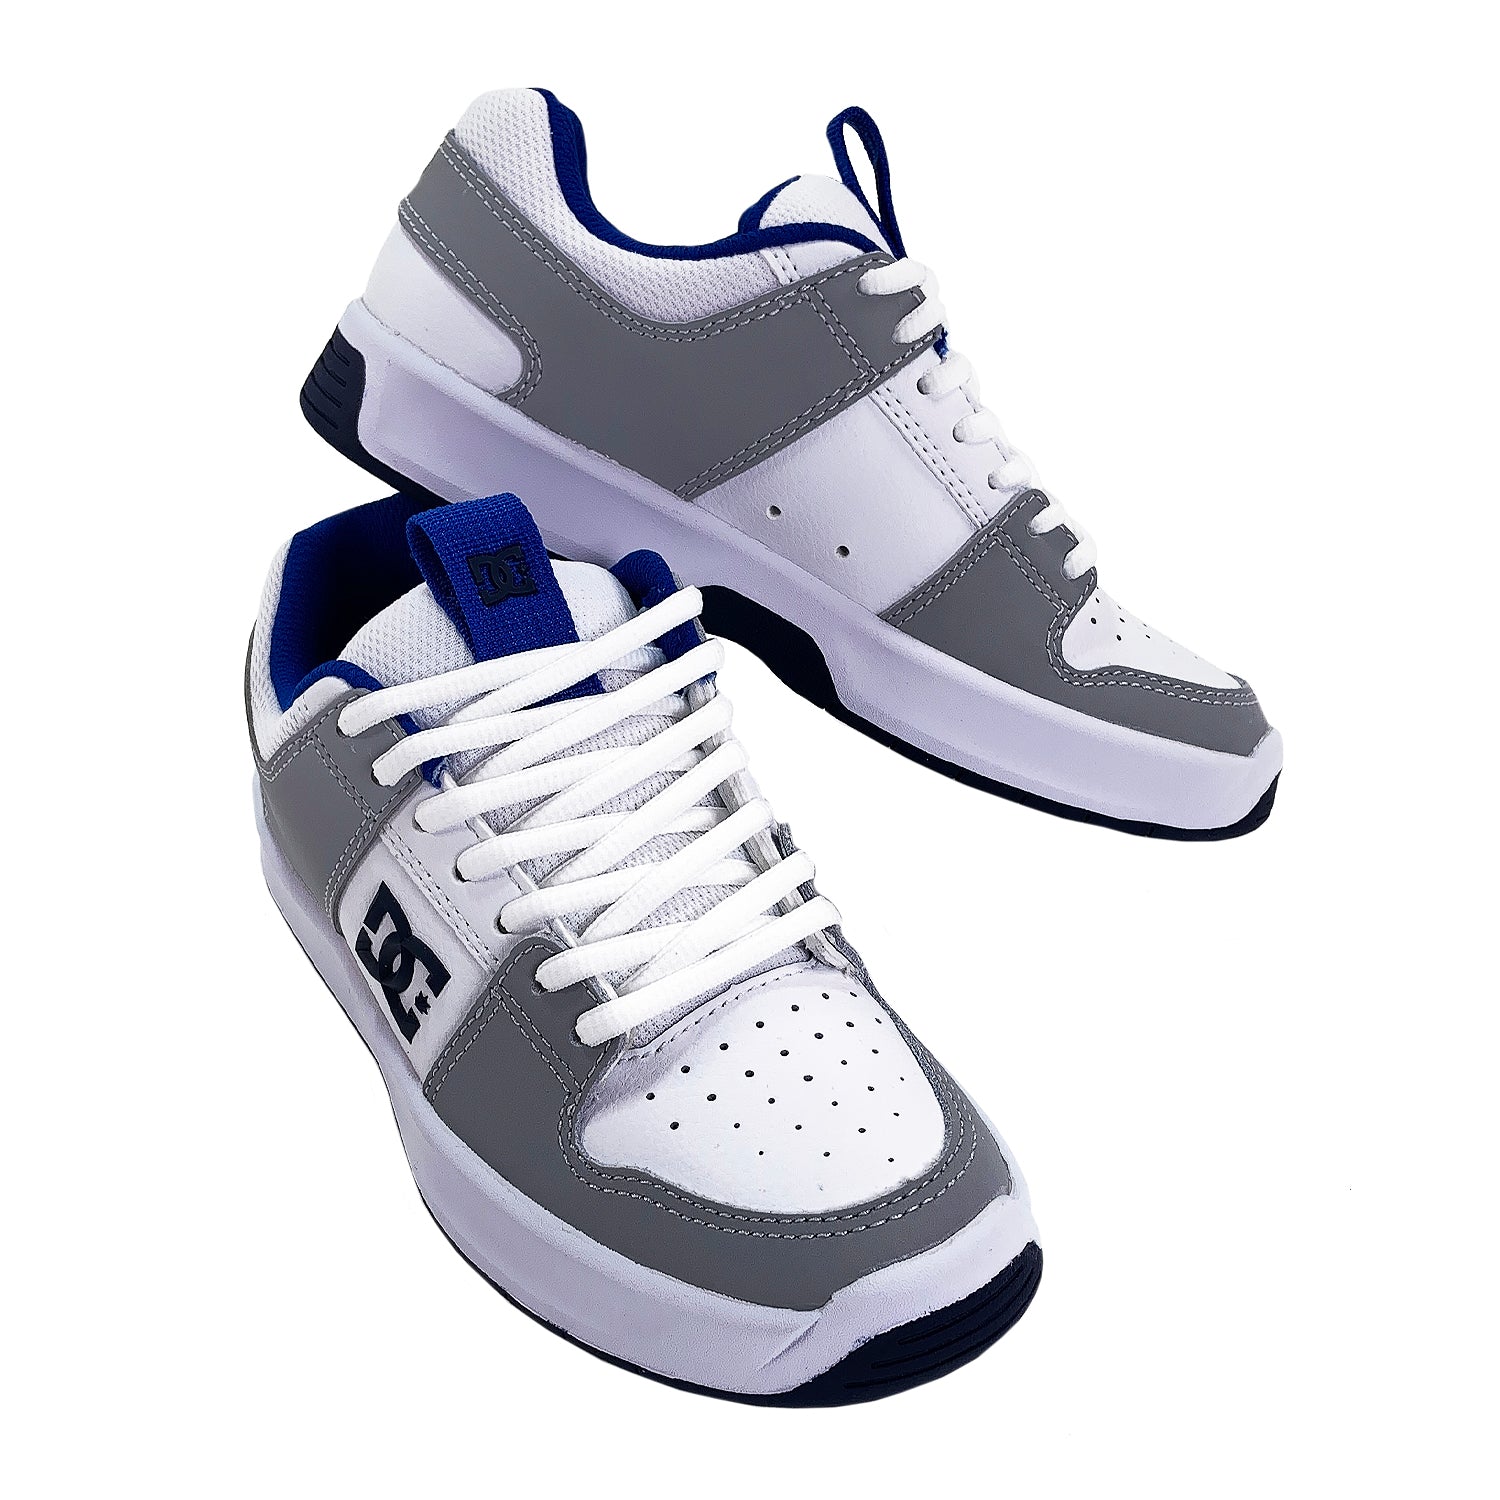 DC Lynx Zero Kids Shoes - Grey / White / Blue - Prime Delux Store